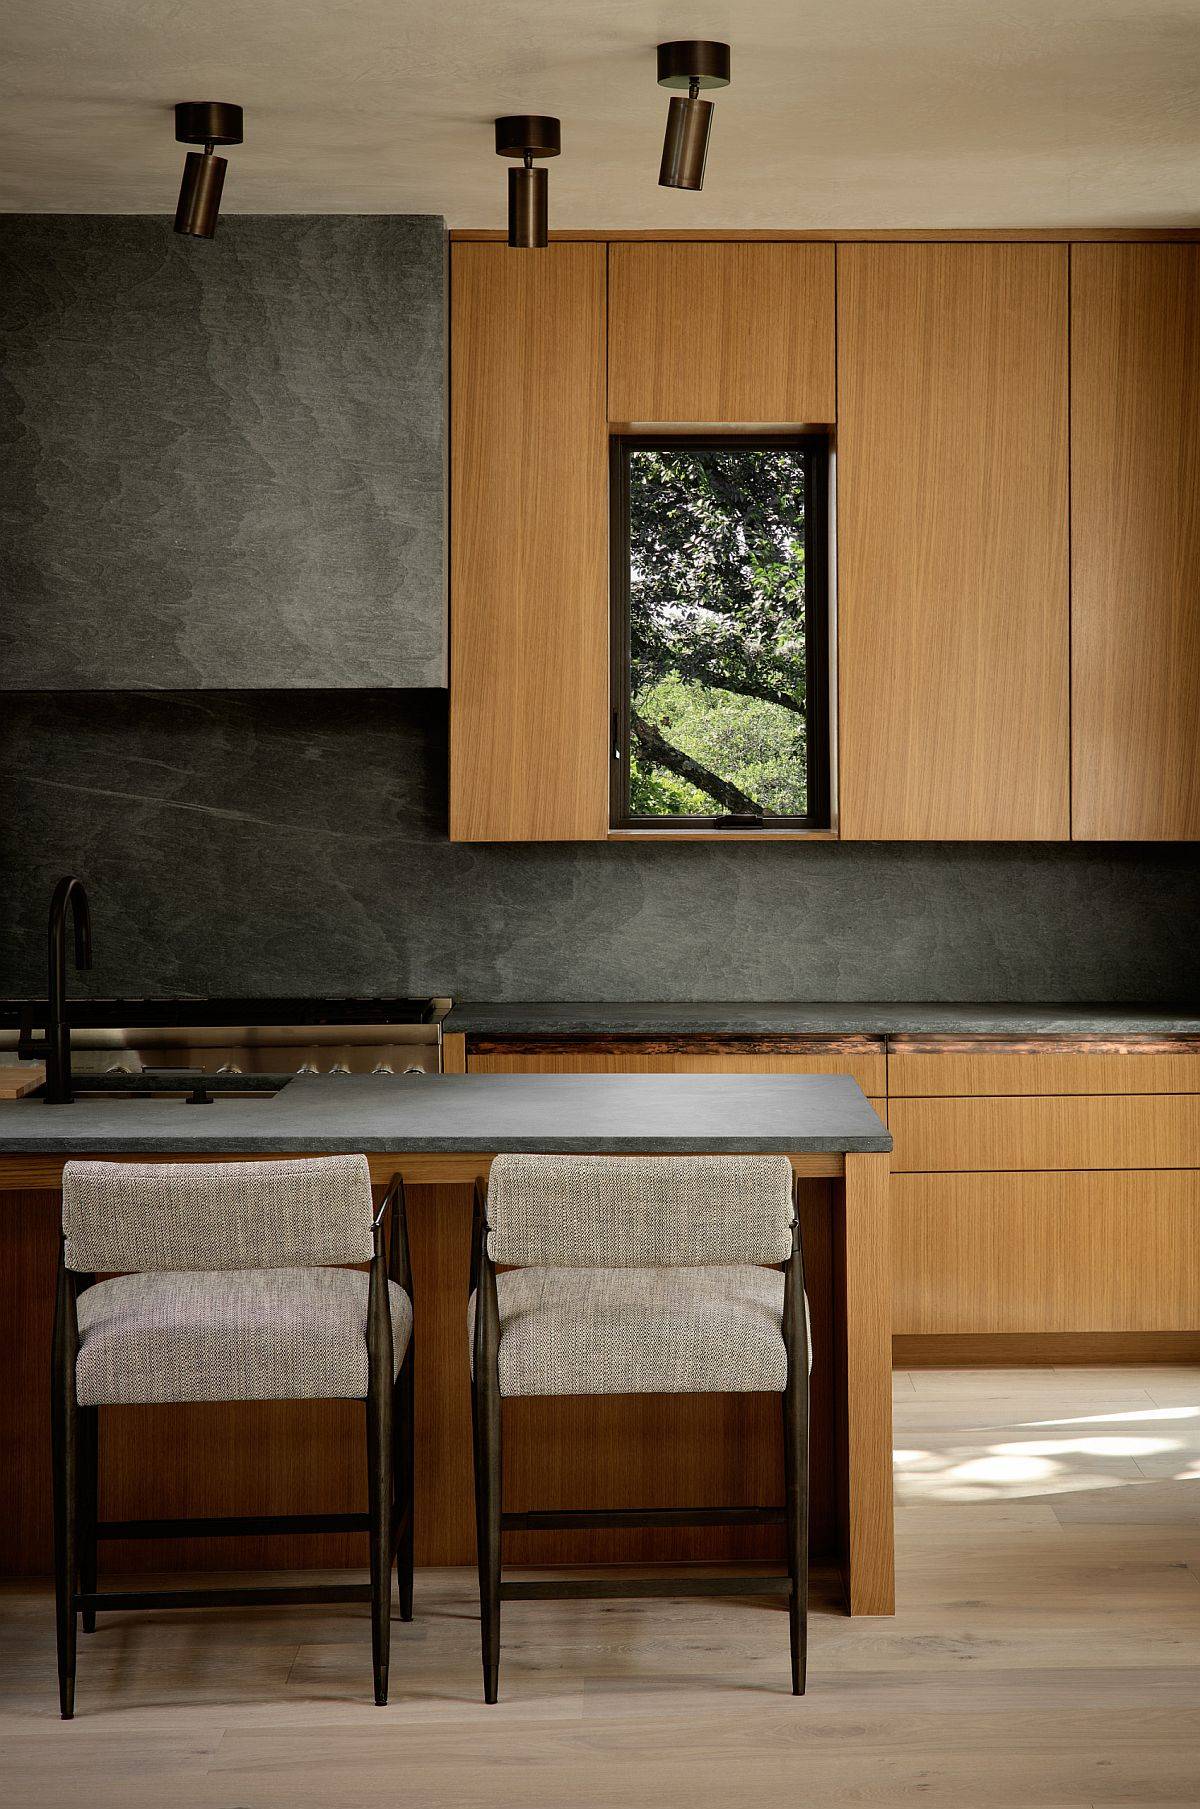 Minimal-modern-kitchen-in-stone-and-wood-with-a-dark-backsplash-66969